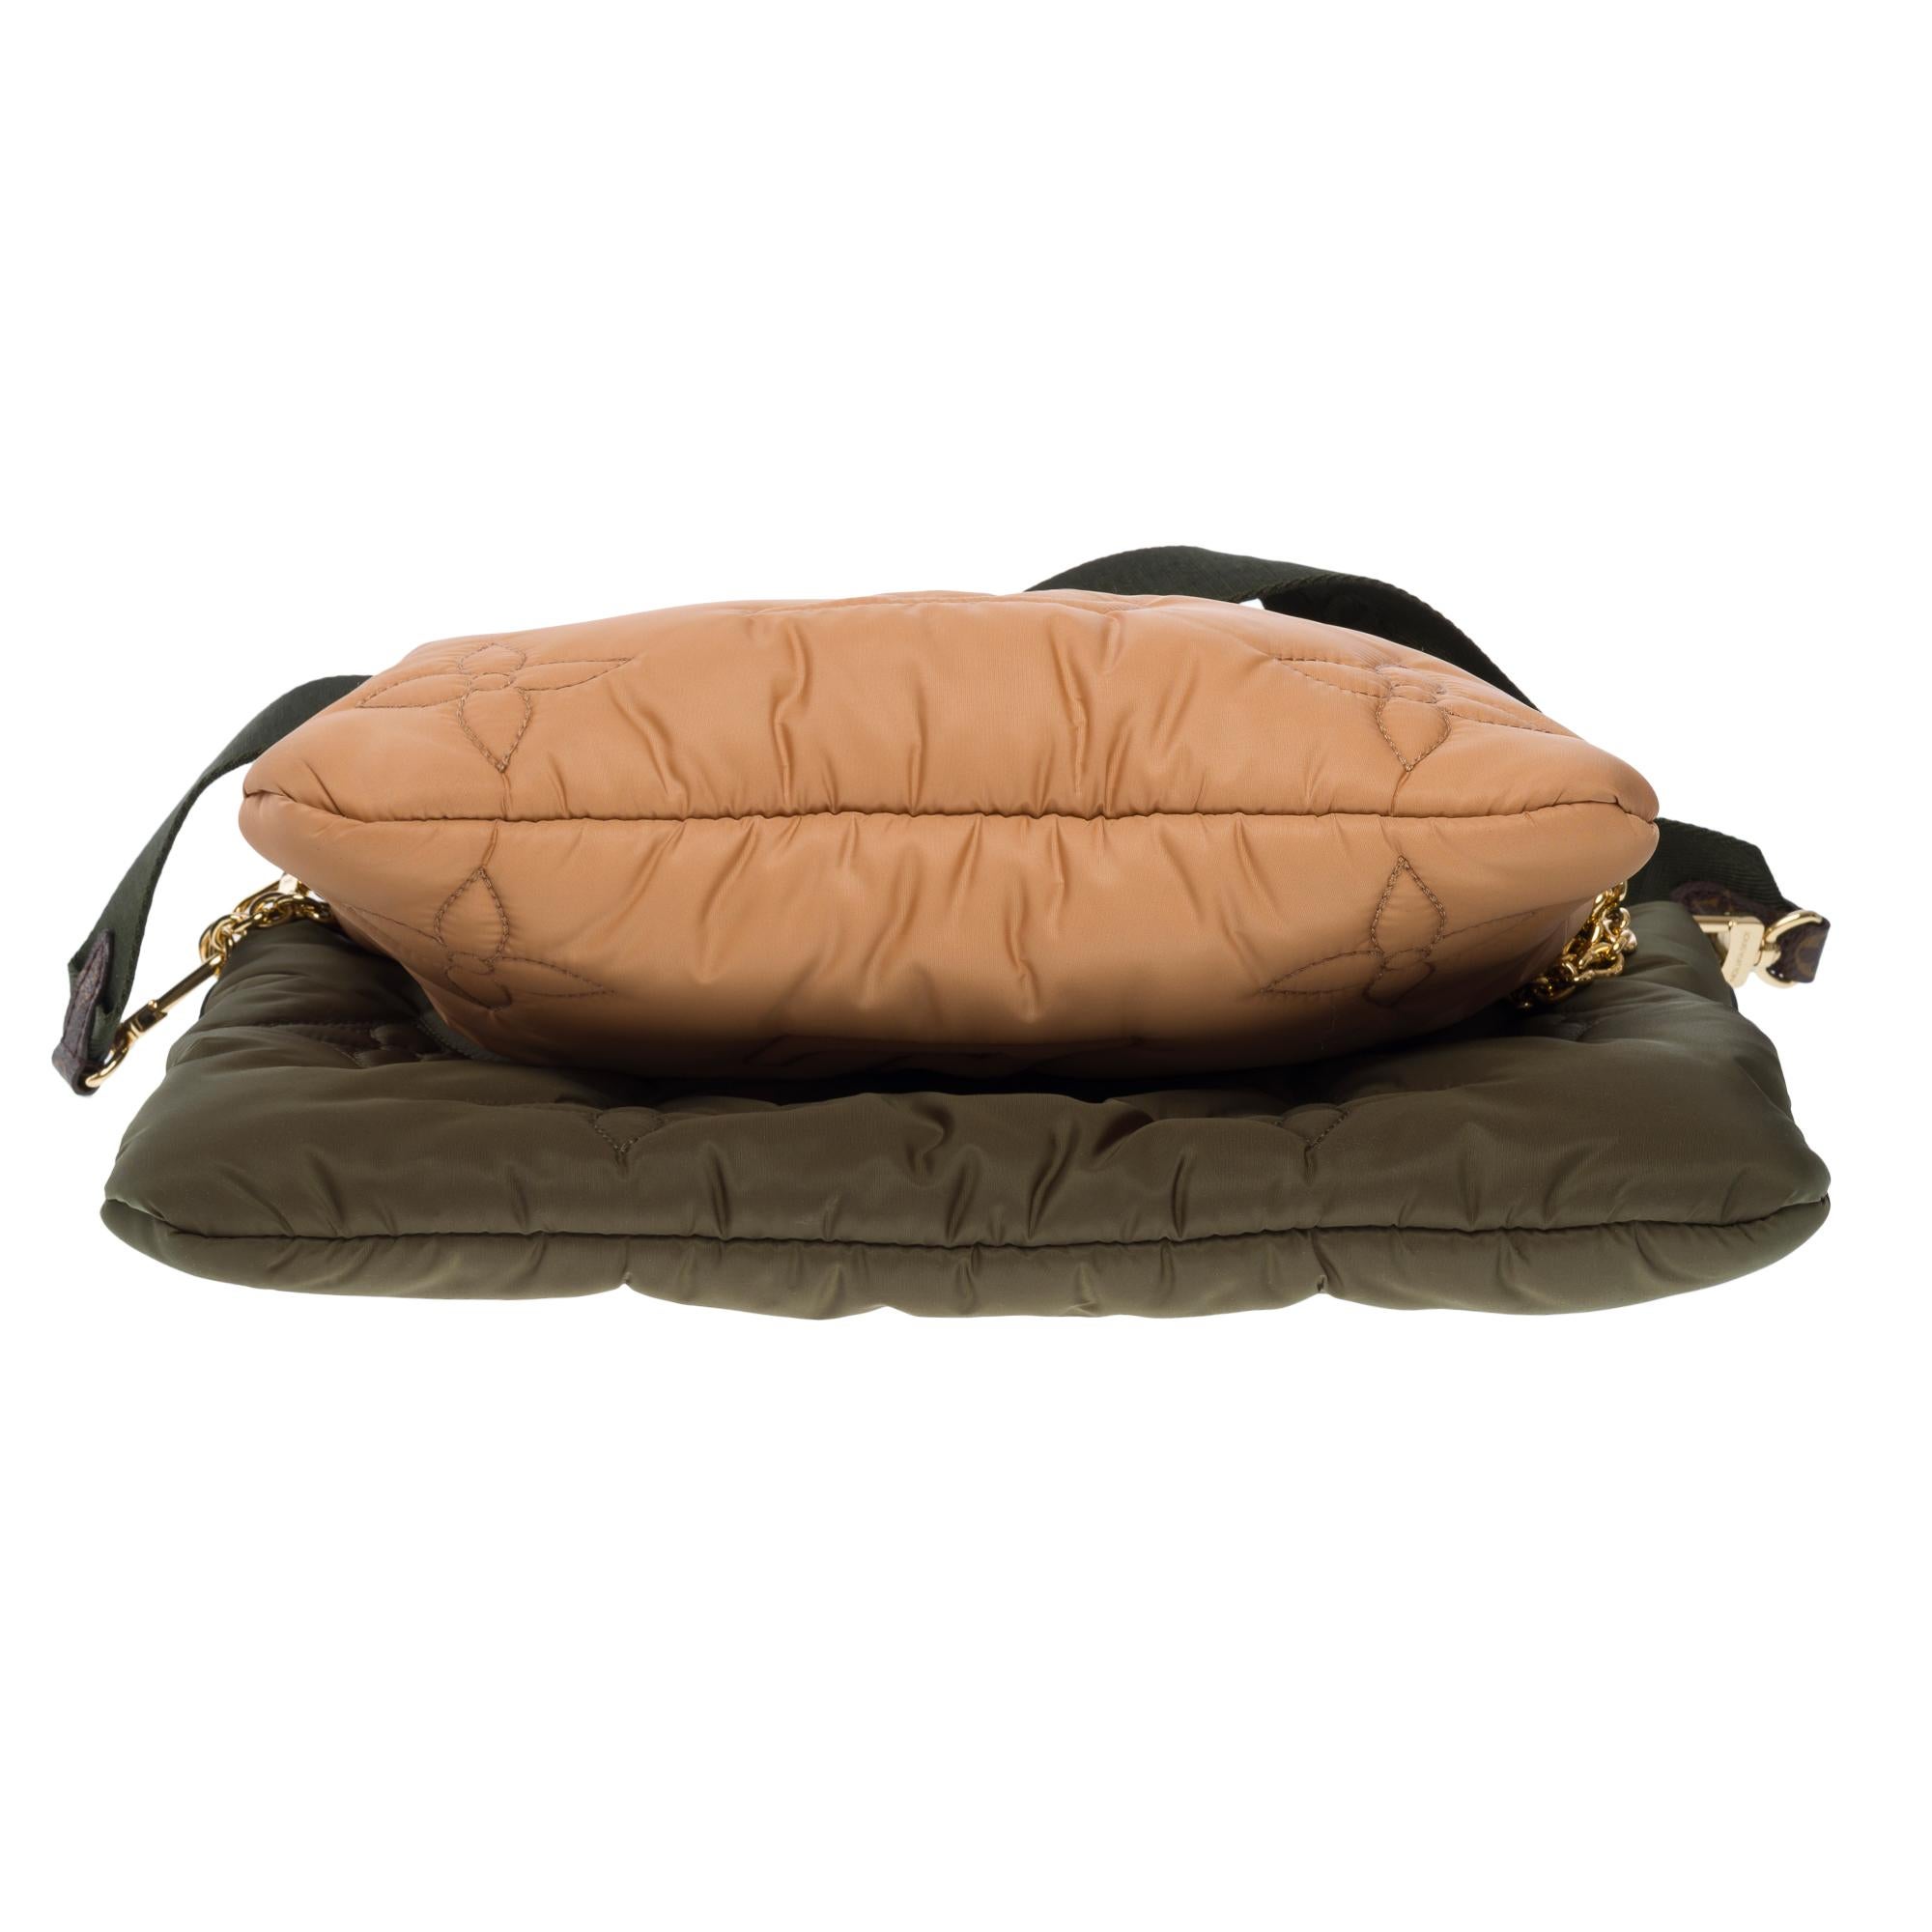 New Louis Vuitton Pillow Maxi Pochette shoulder bag in khaki/Beige nylon, GHW For Sale 7